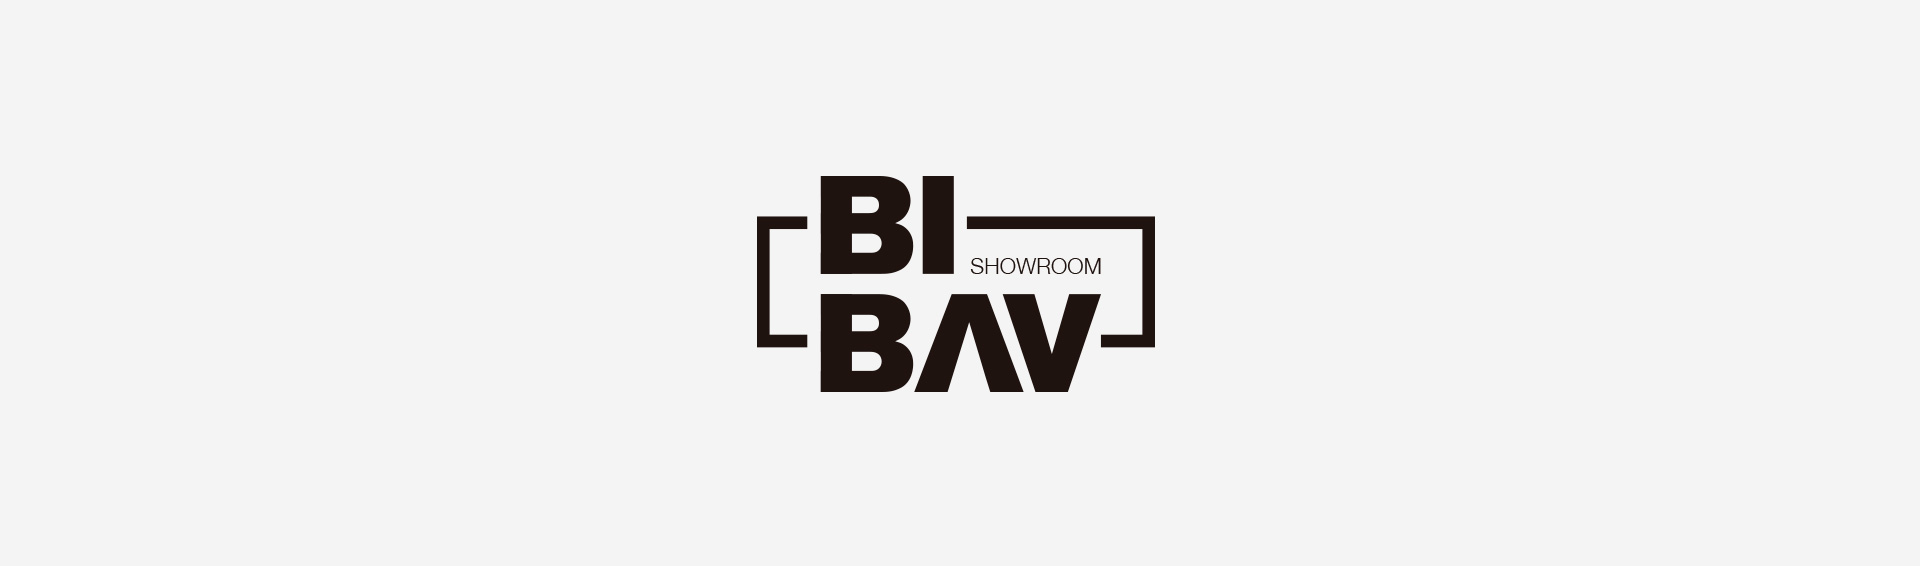 bibav_logotype_identity_corporate